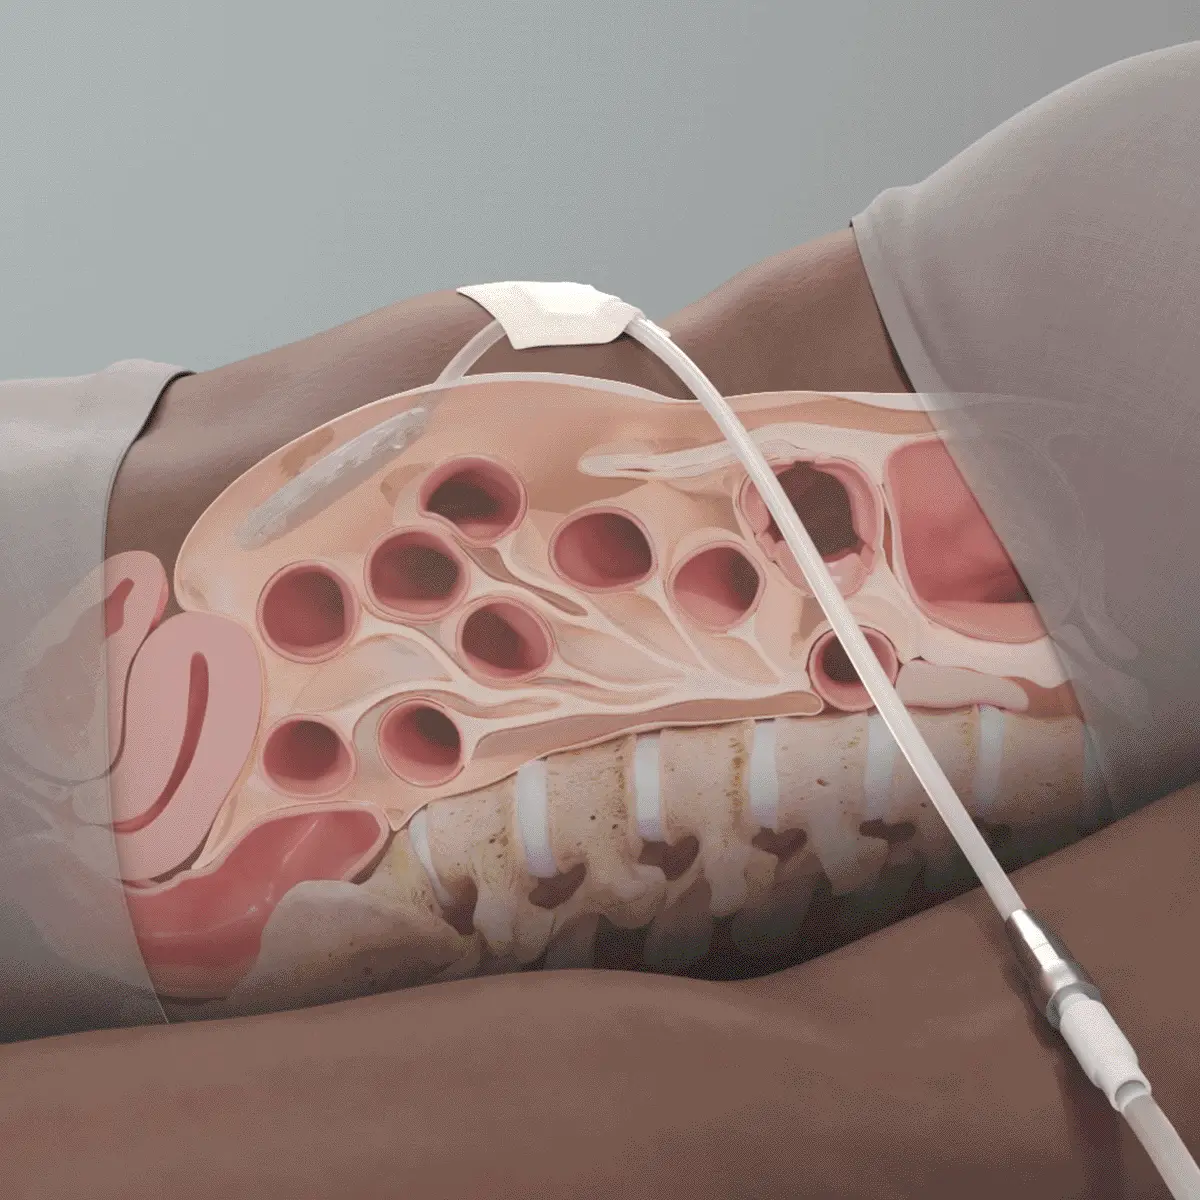 Animation of peritoneal dialysis